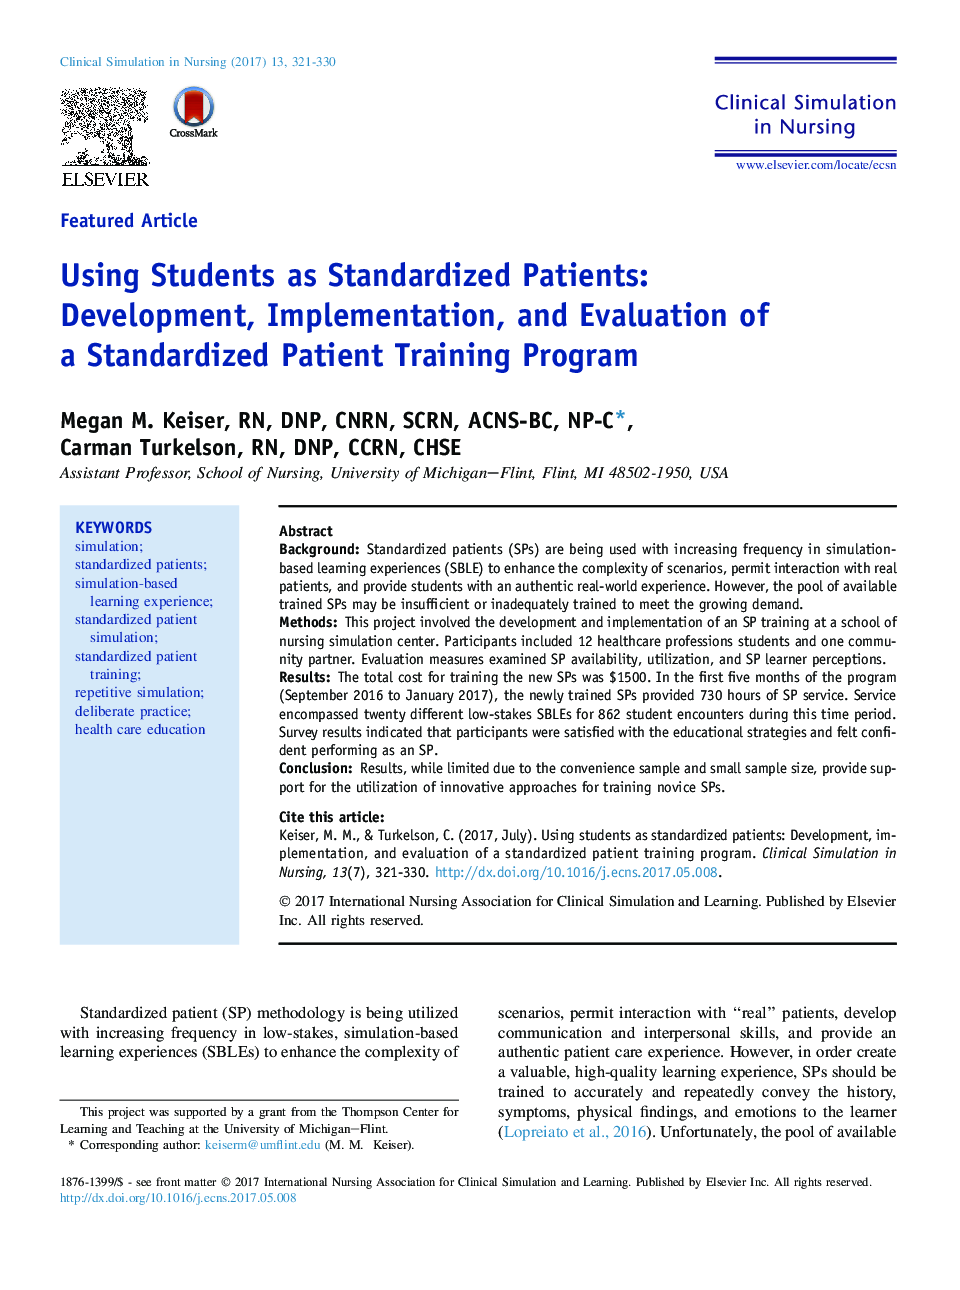 Using Students as Standardized Patients: Development, Implementation, and Evaluation of a Standardized Patient Training Program